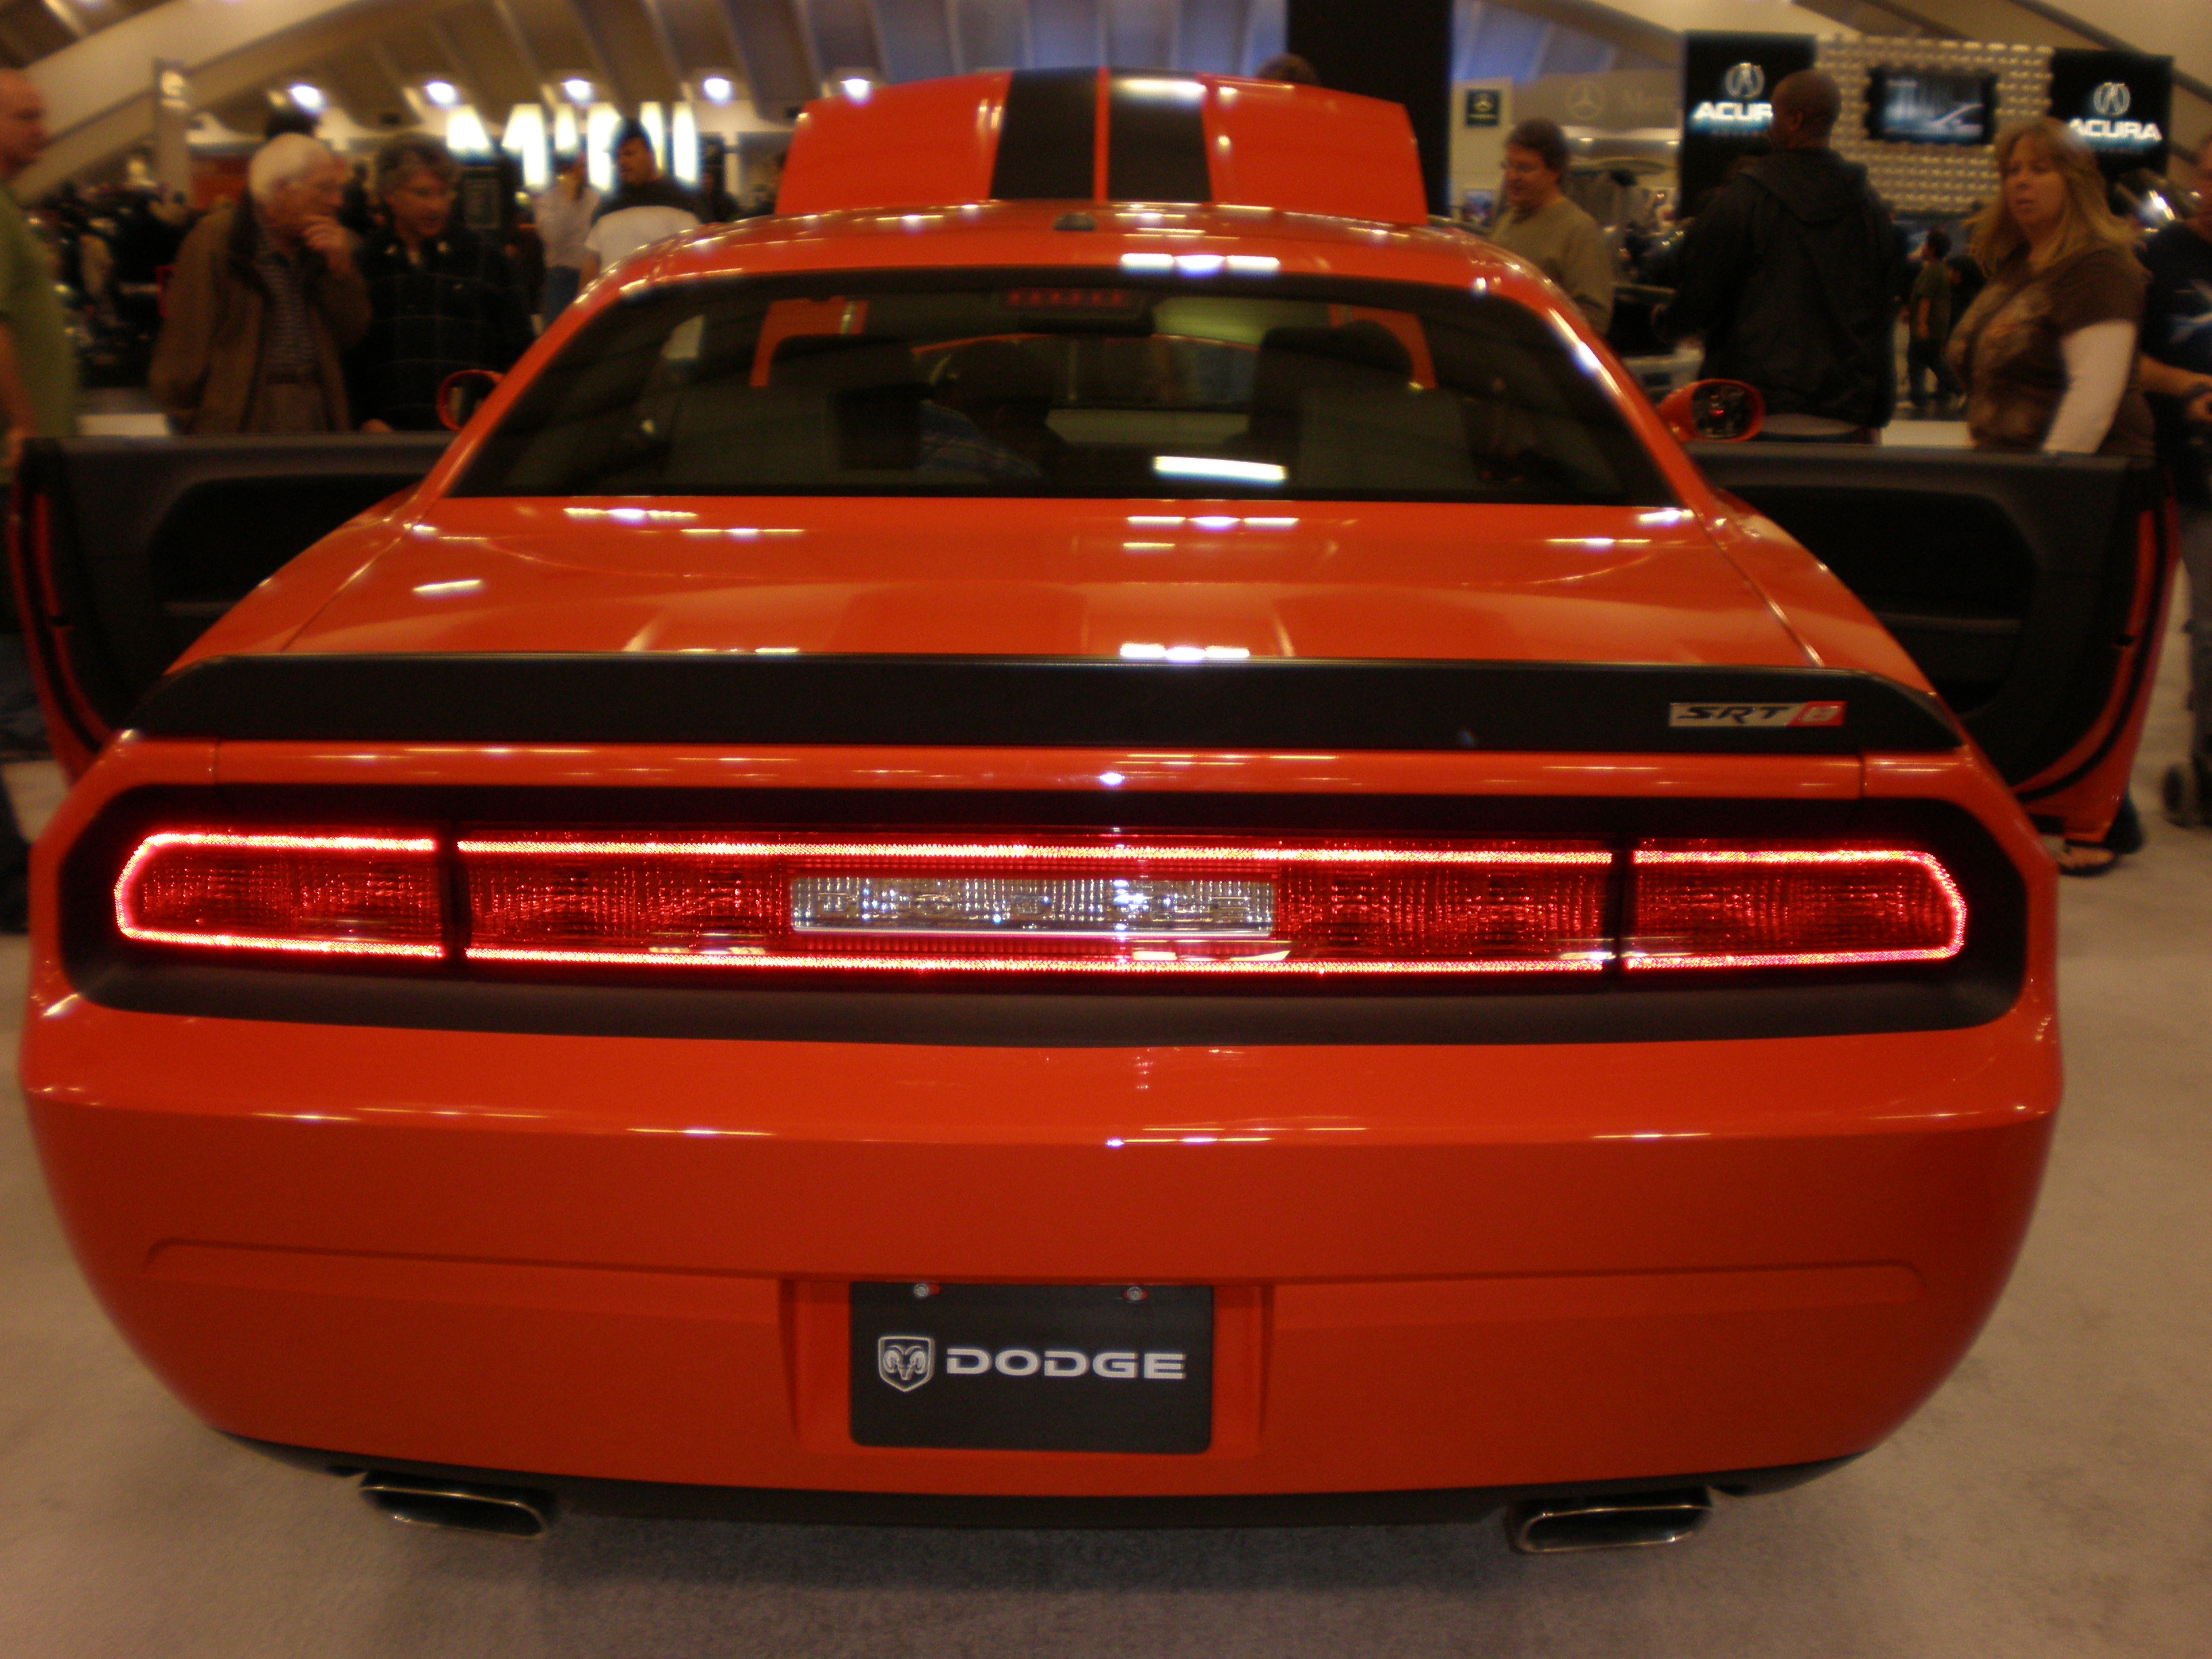 2009_red_Dodge_Challenger_SRT8_rear.JPG